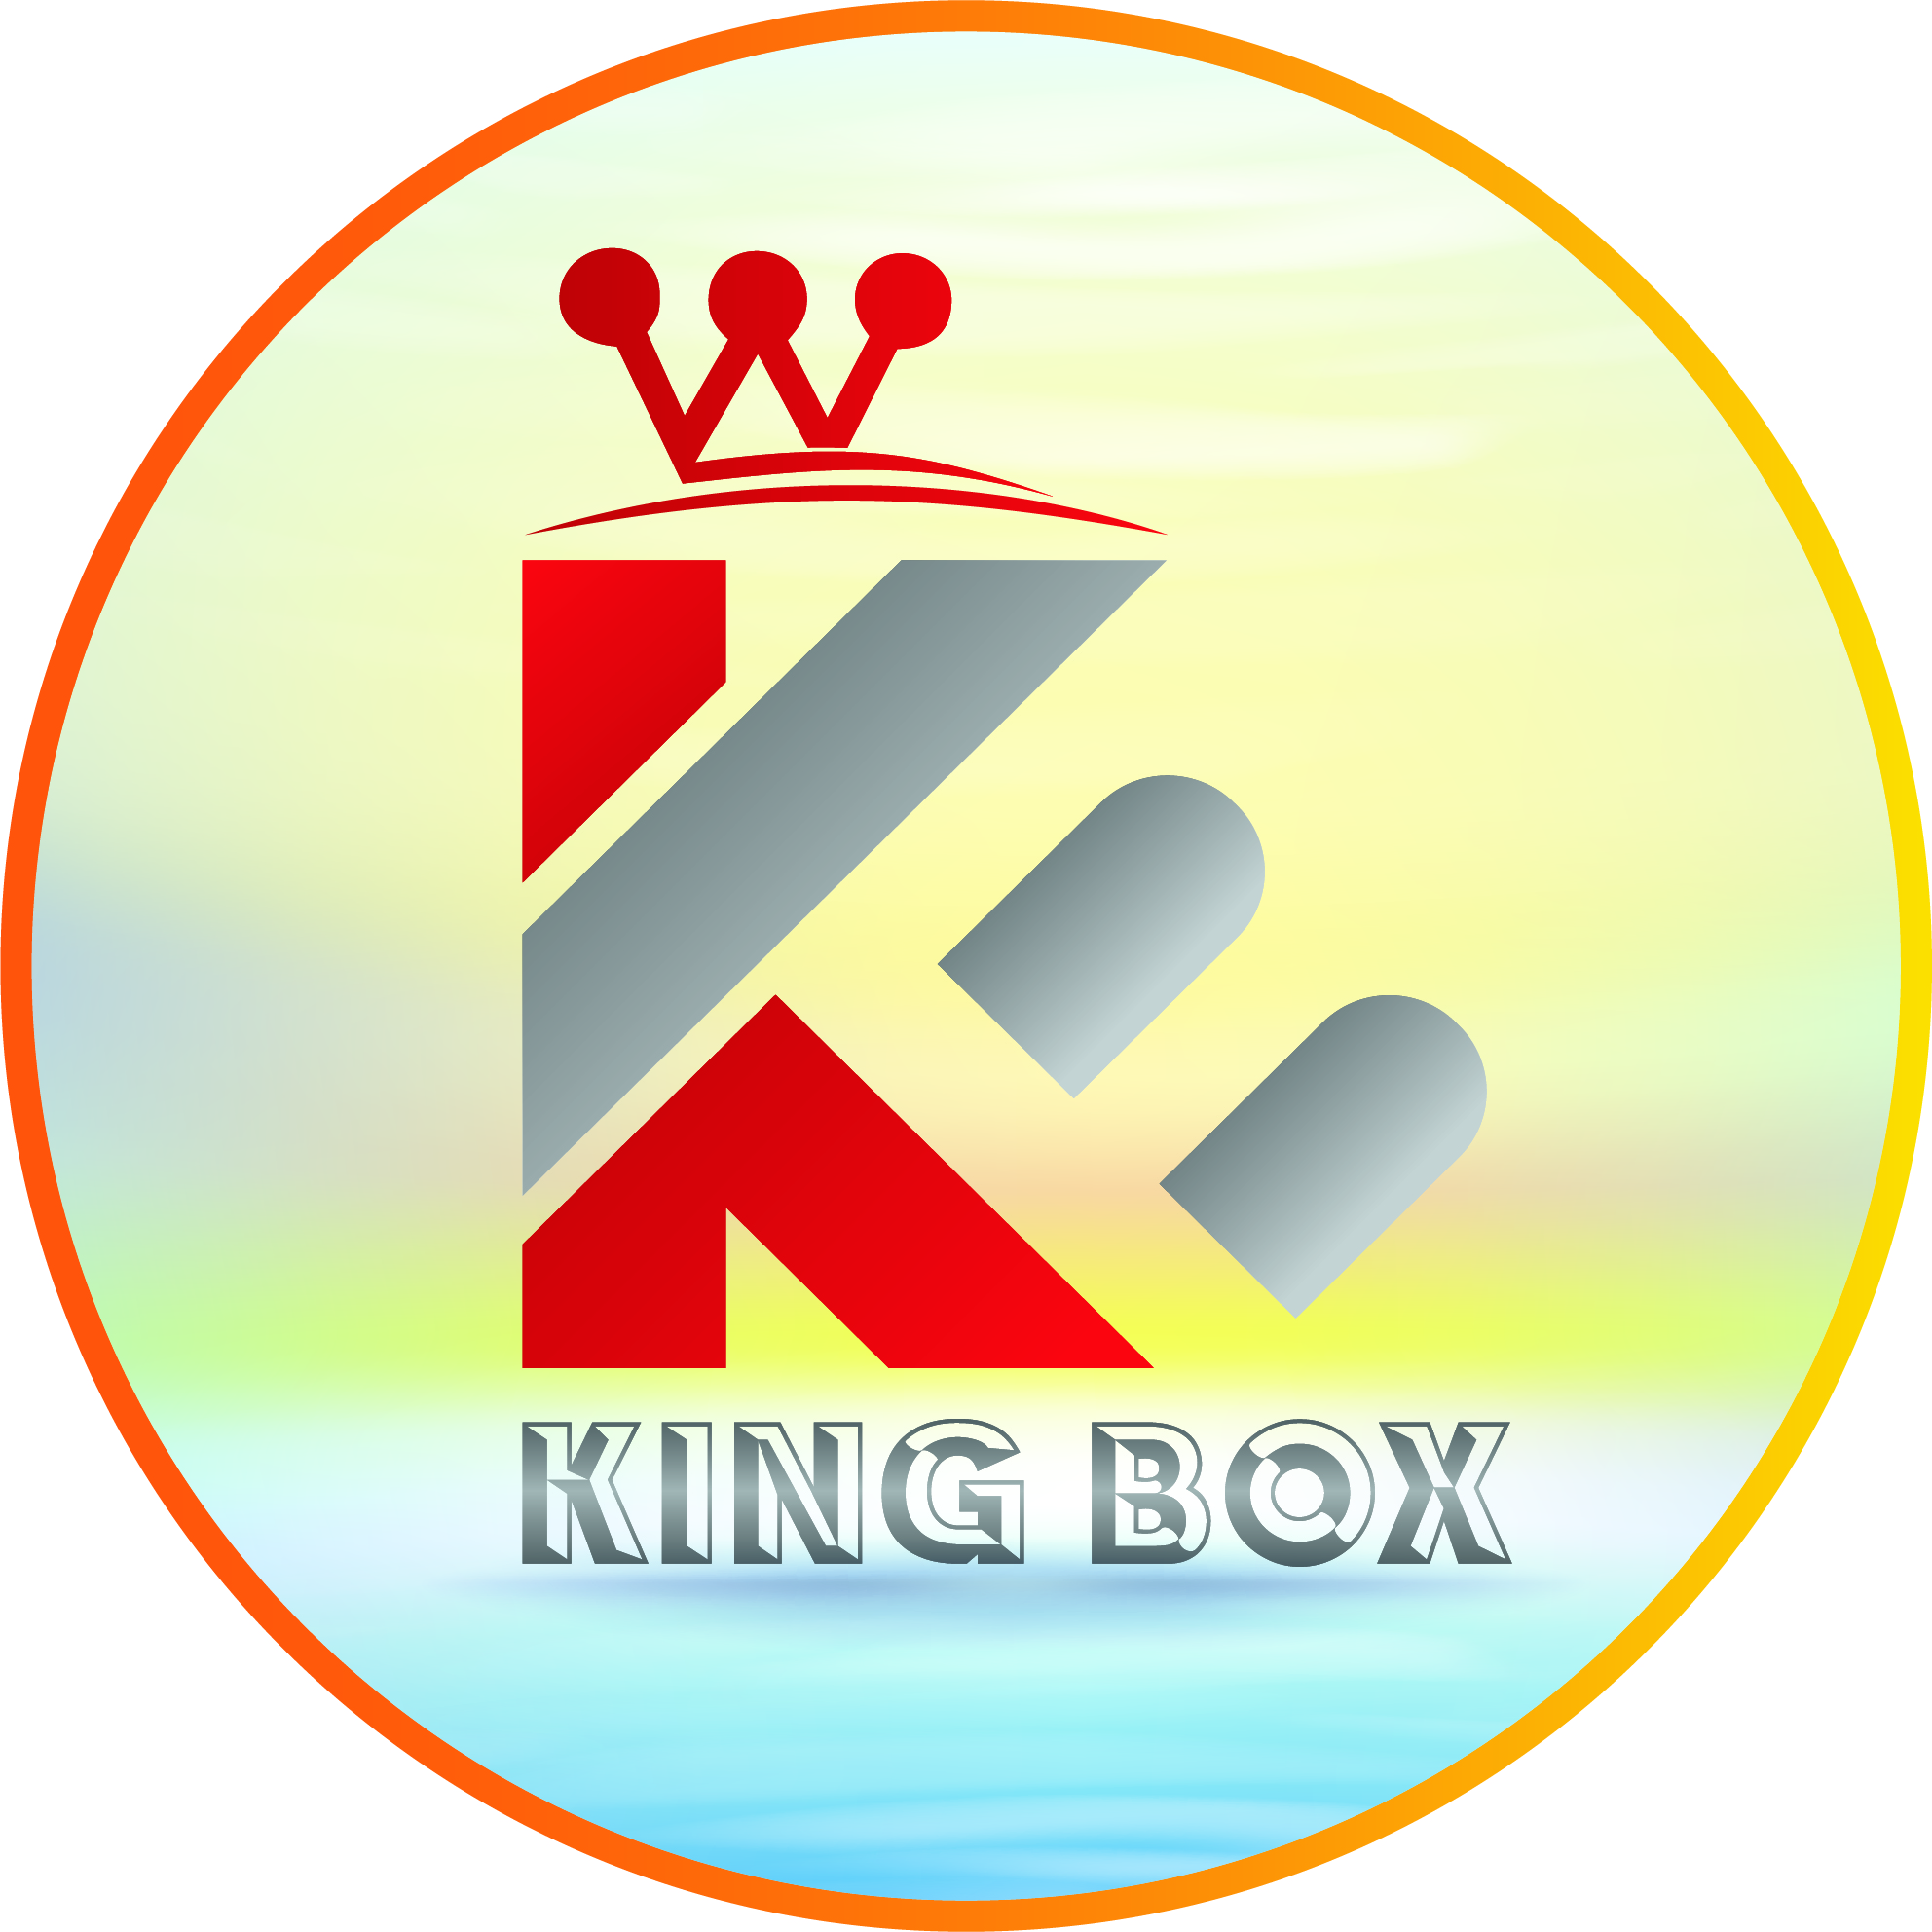 KING BOXX